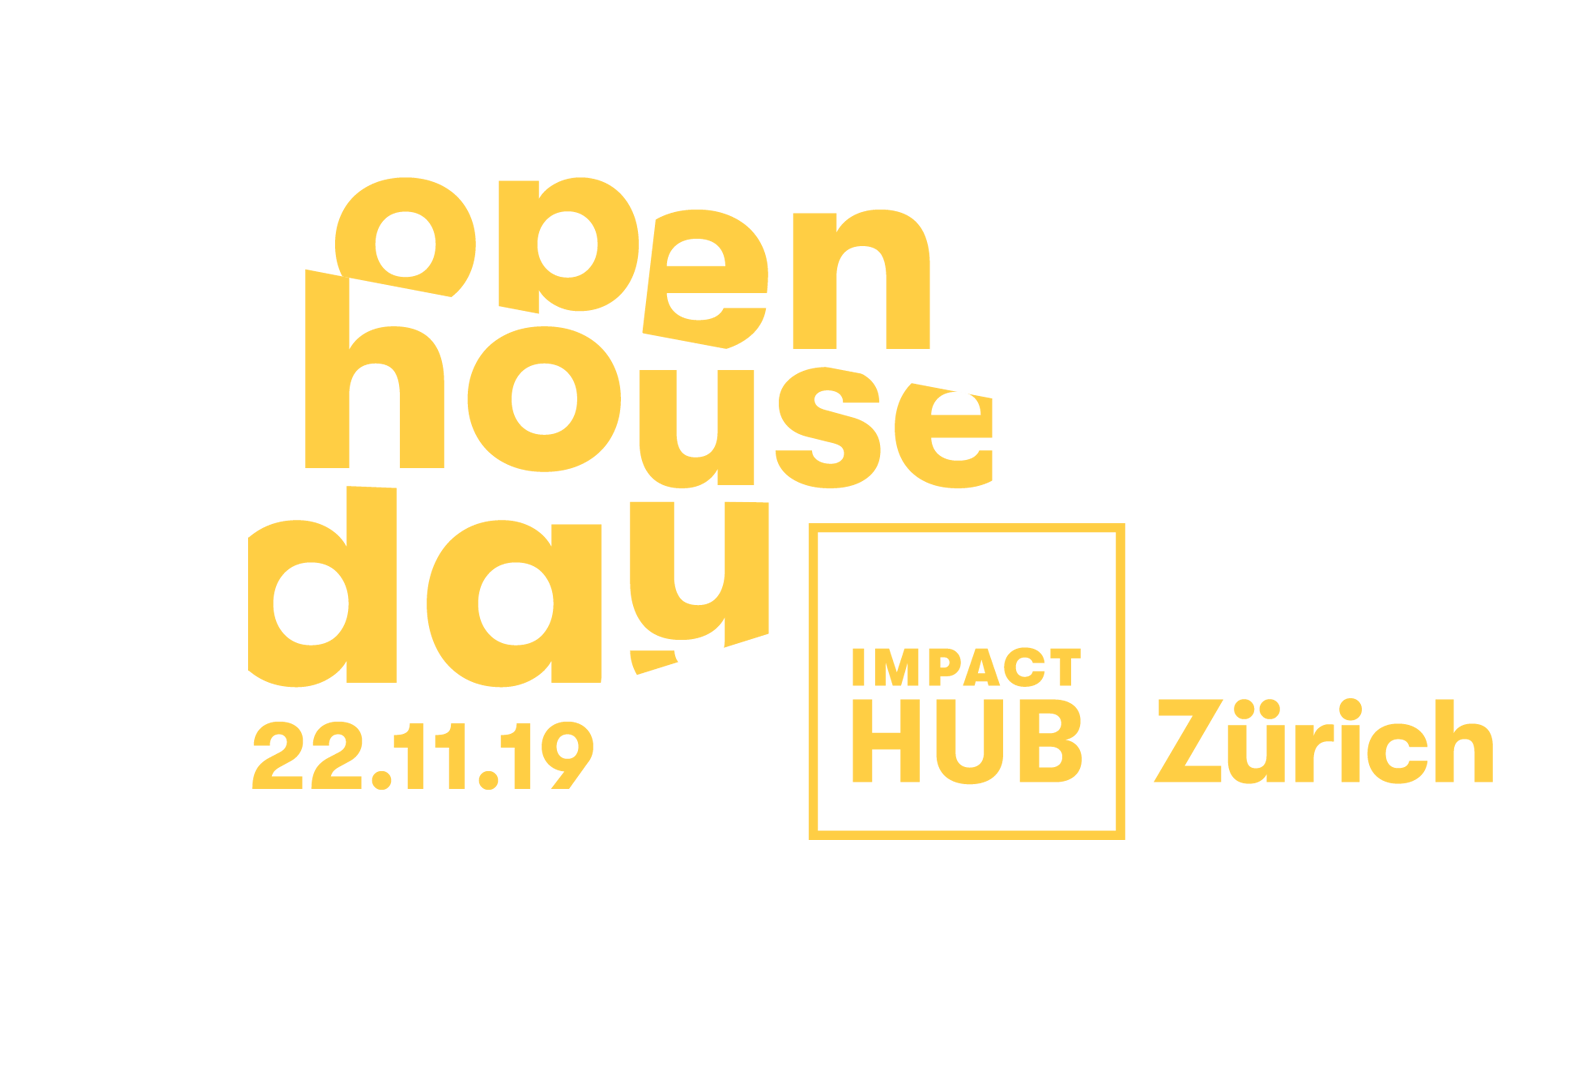 IHZ_openhouse_logo_date_yellow_r.png